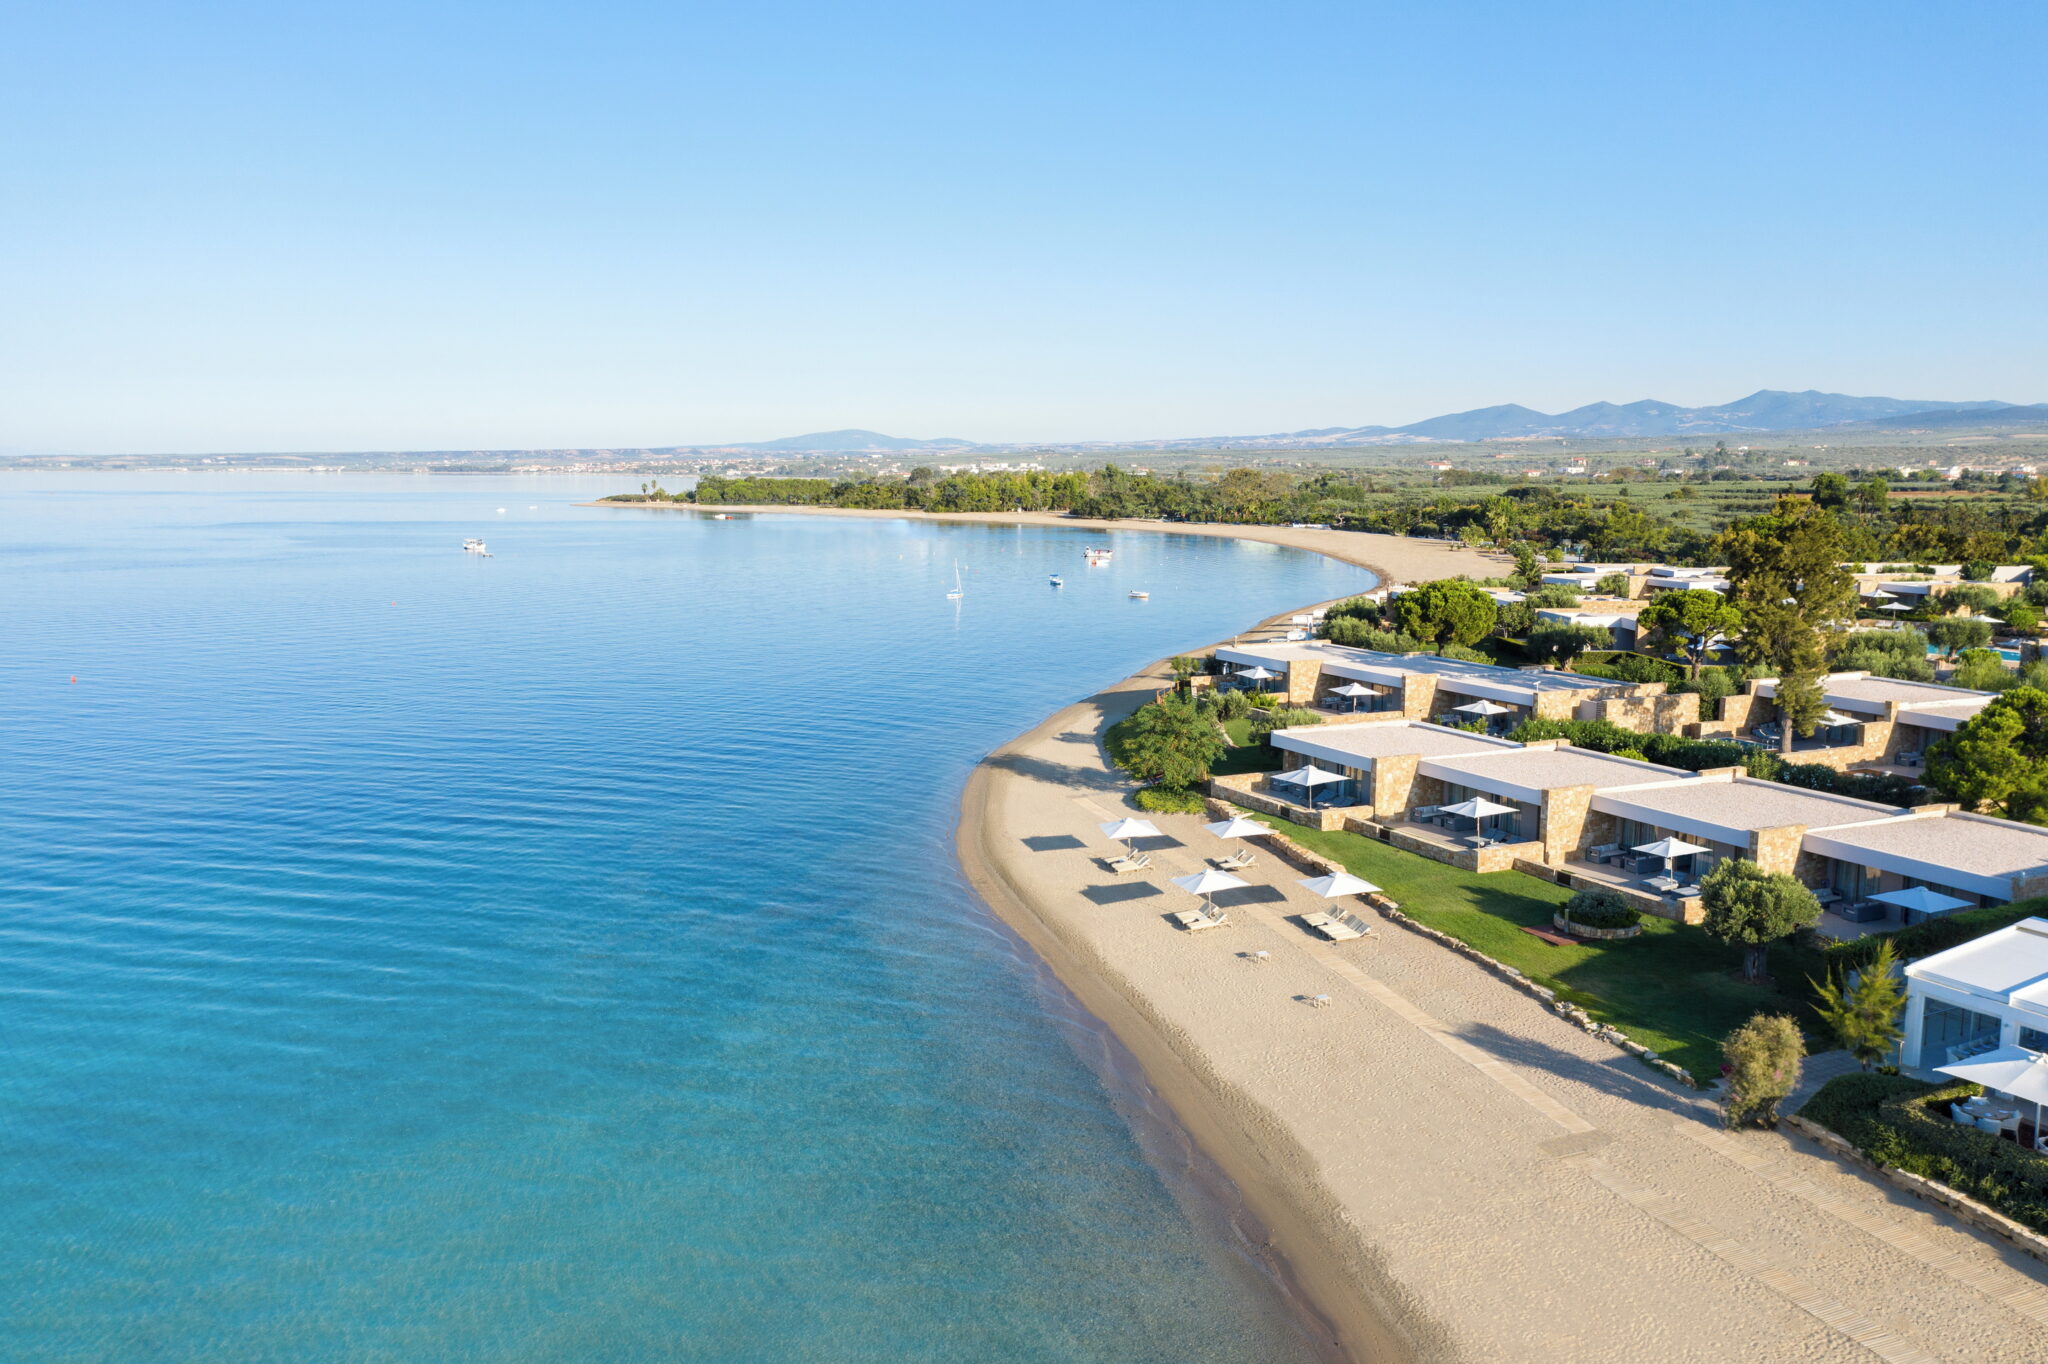 Sani/Ikos on an impressive hotel ivestment in Crete